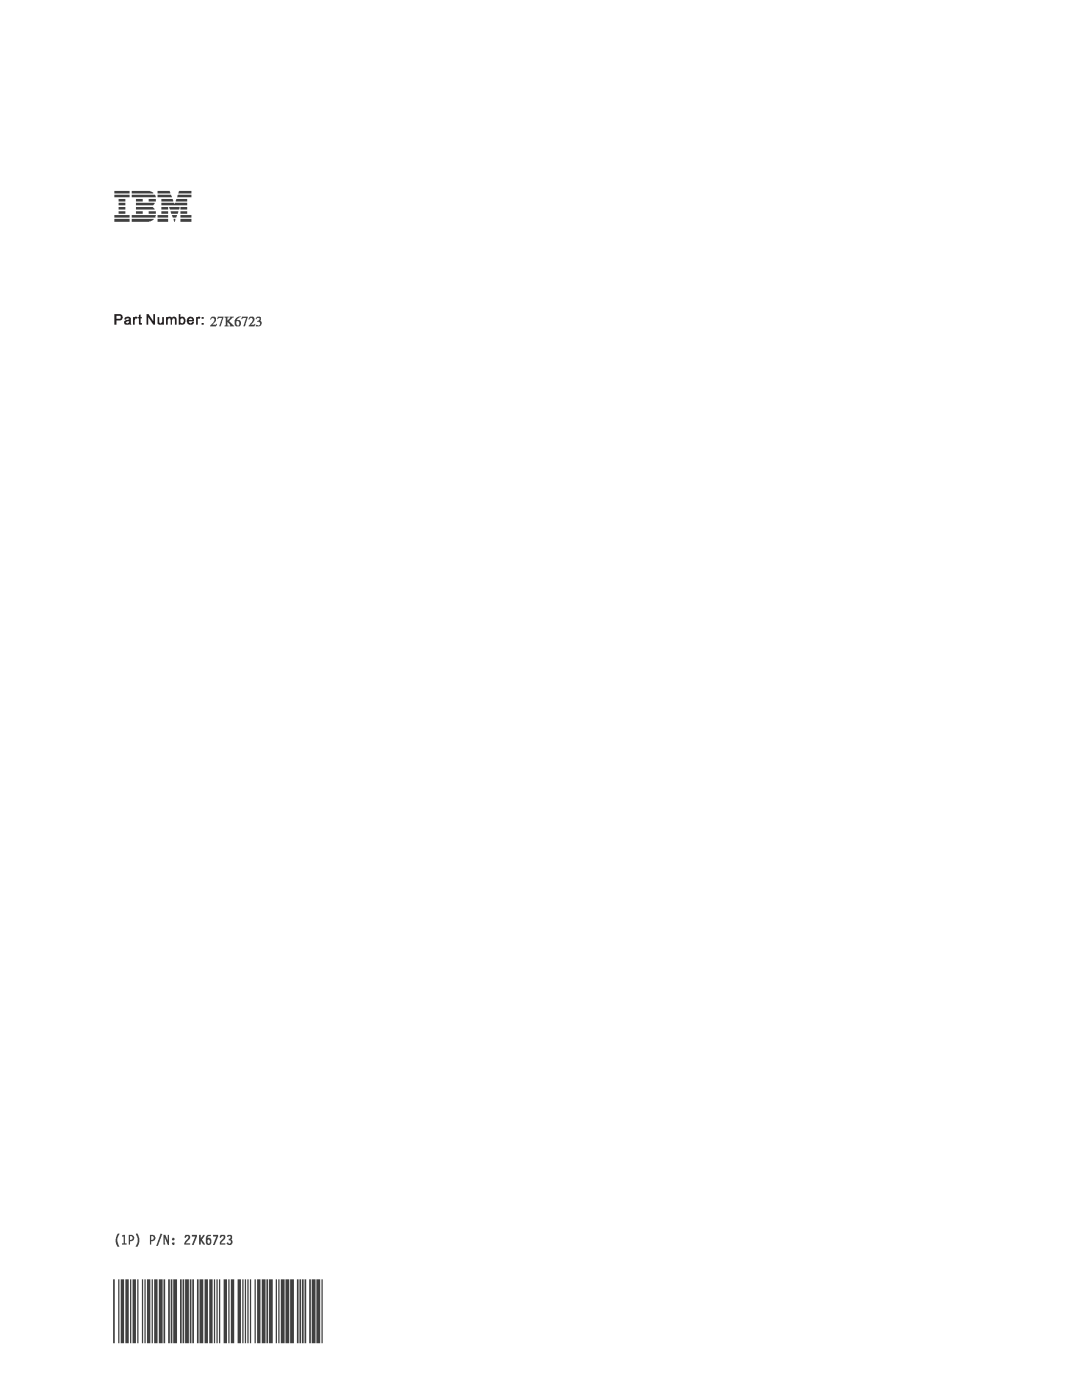 IBM 8143 manual 